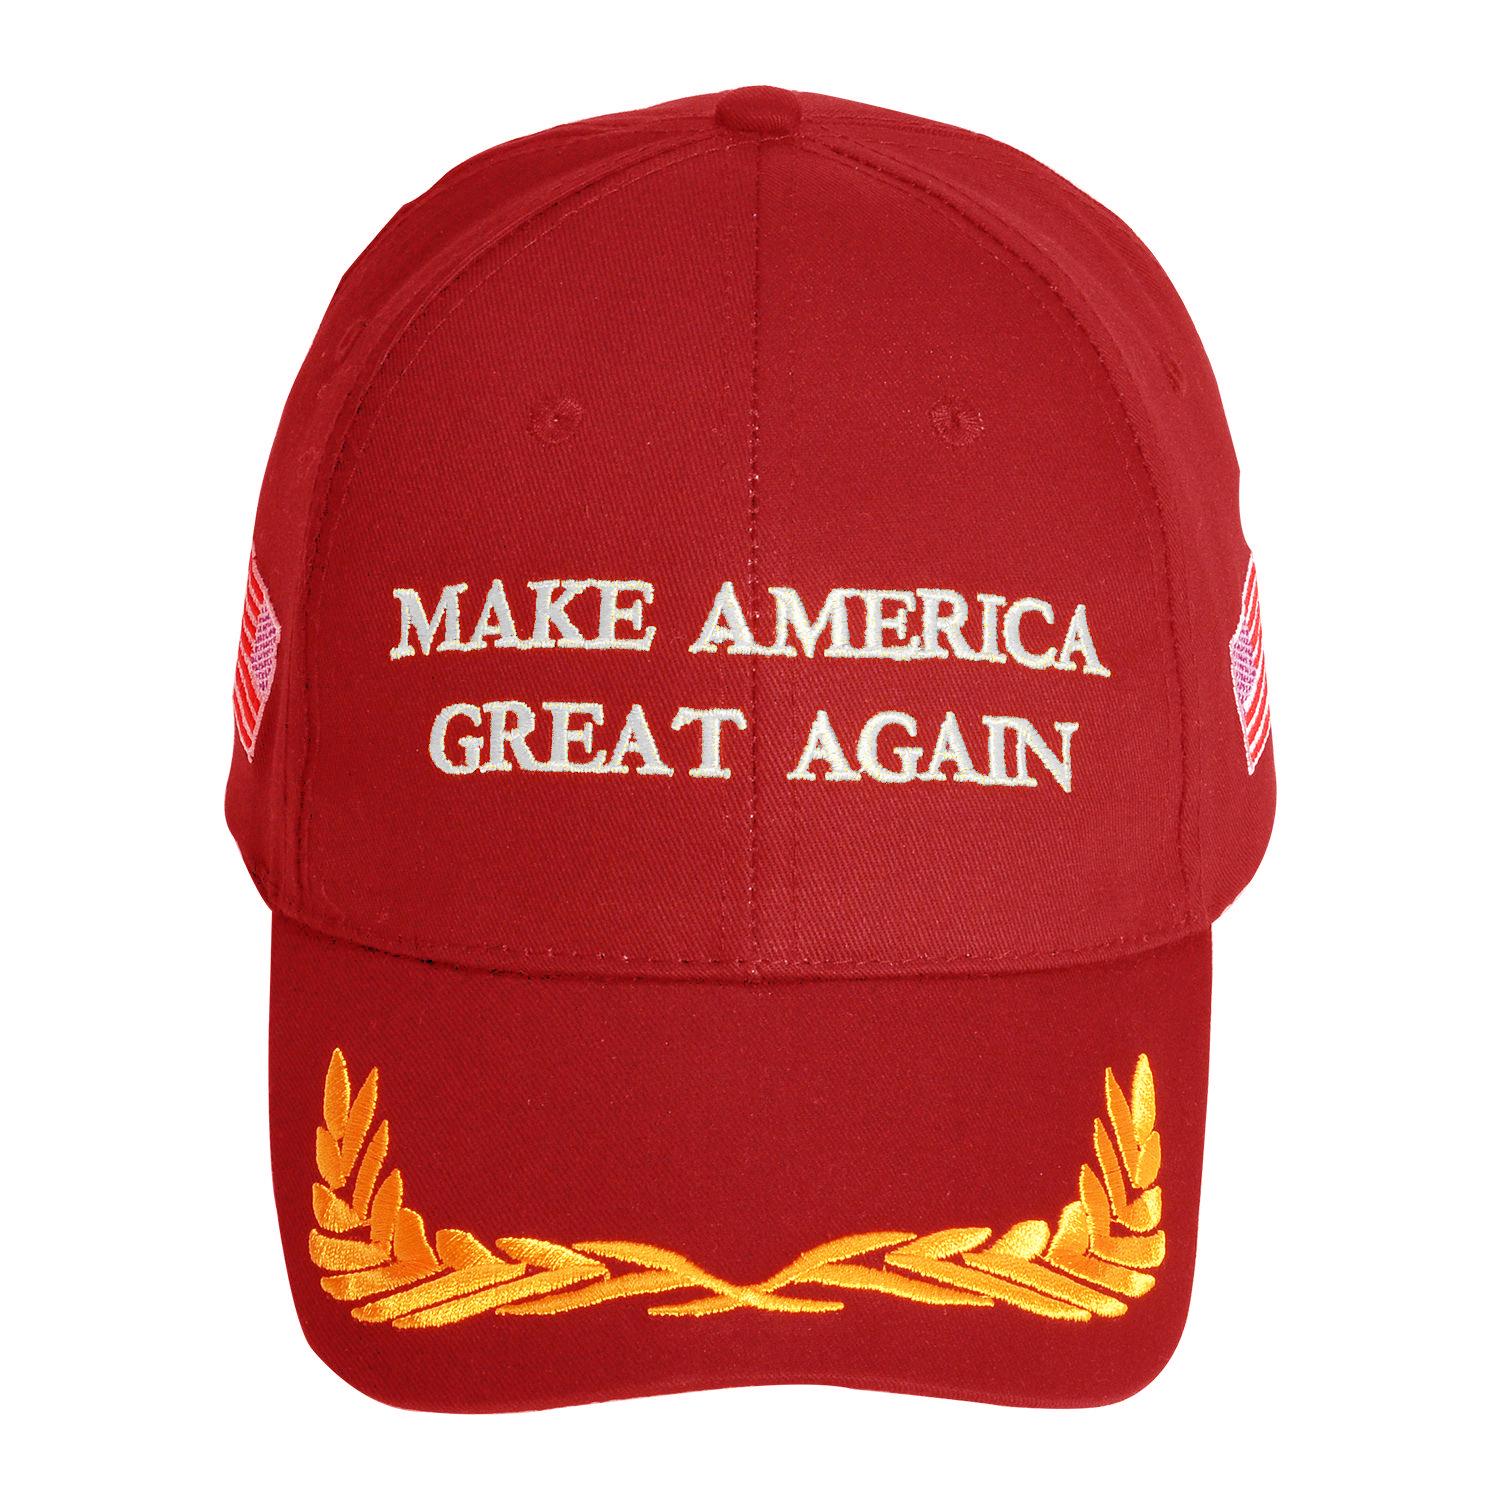 2020-make-america-great-again-hat-donald-trump-republican-adjustable